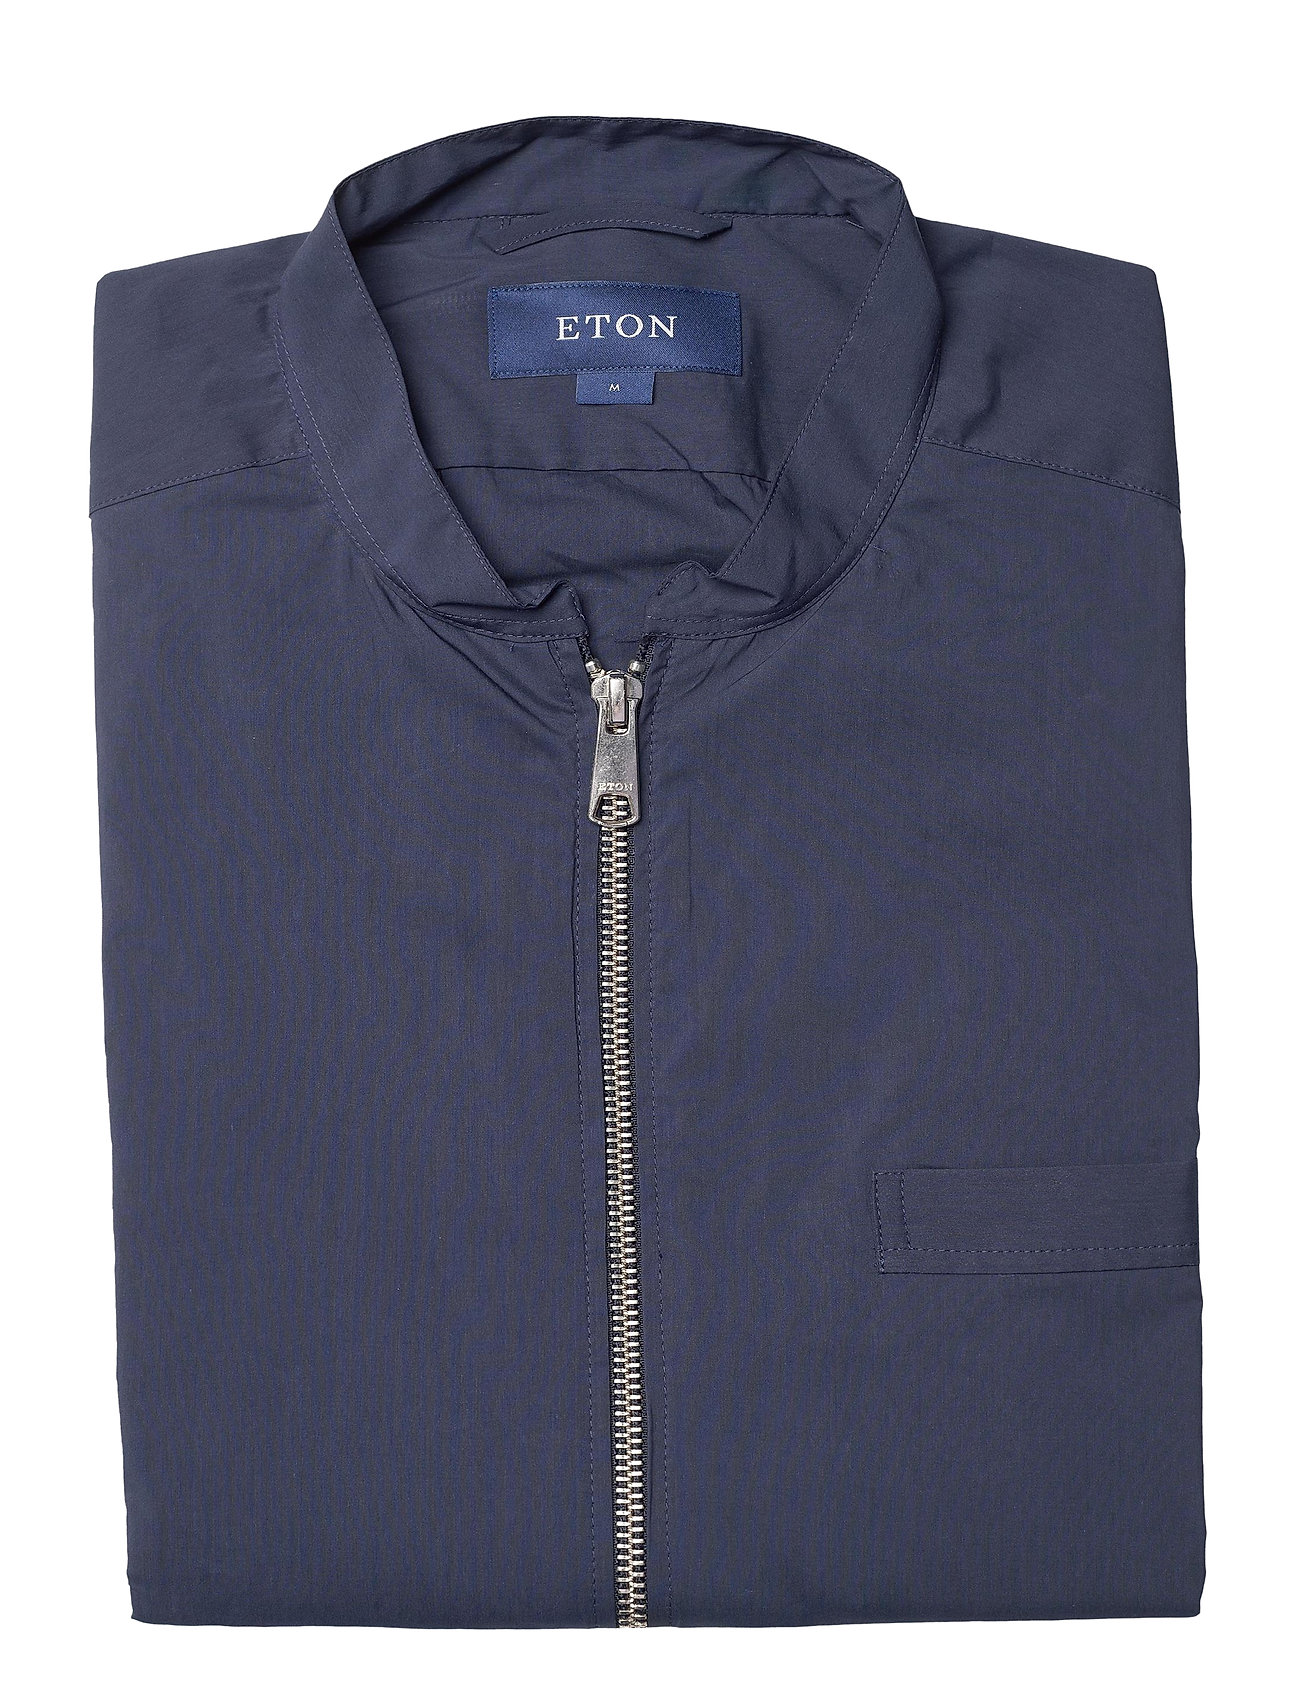 Eton - Men's shirt: Casual  Cotton & Nylon - spring jackets - navy blue - 3